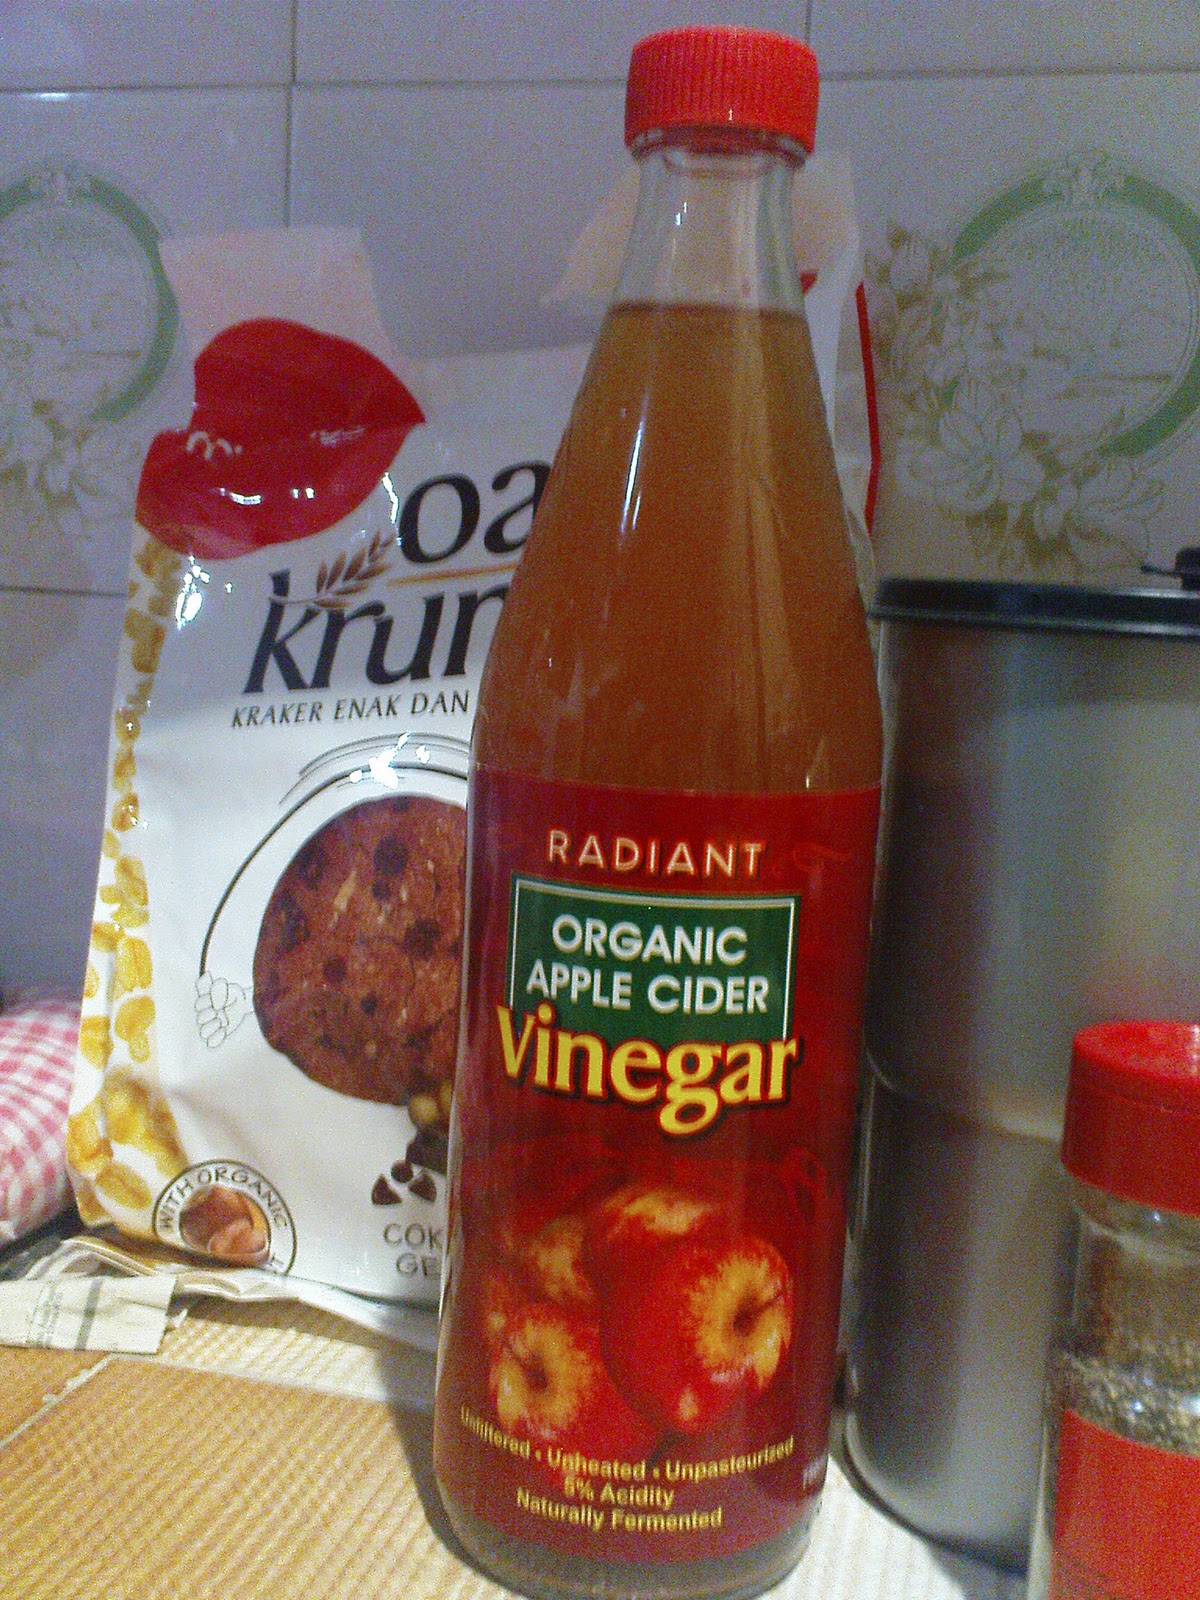 Nothing to display: kebaikan apple cider vinegar (cuka epal)